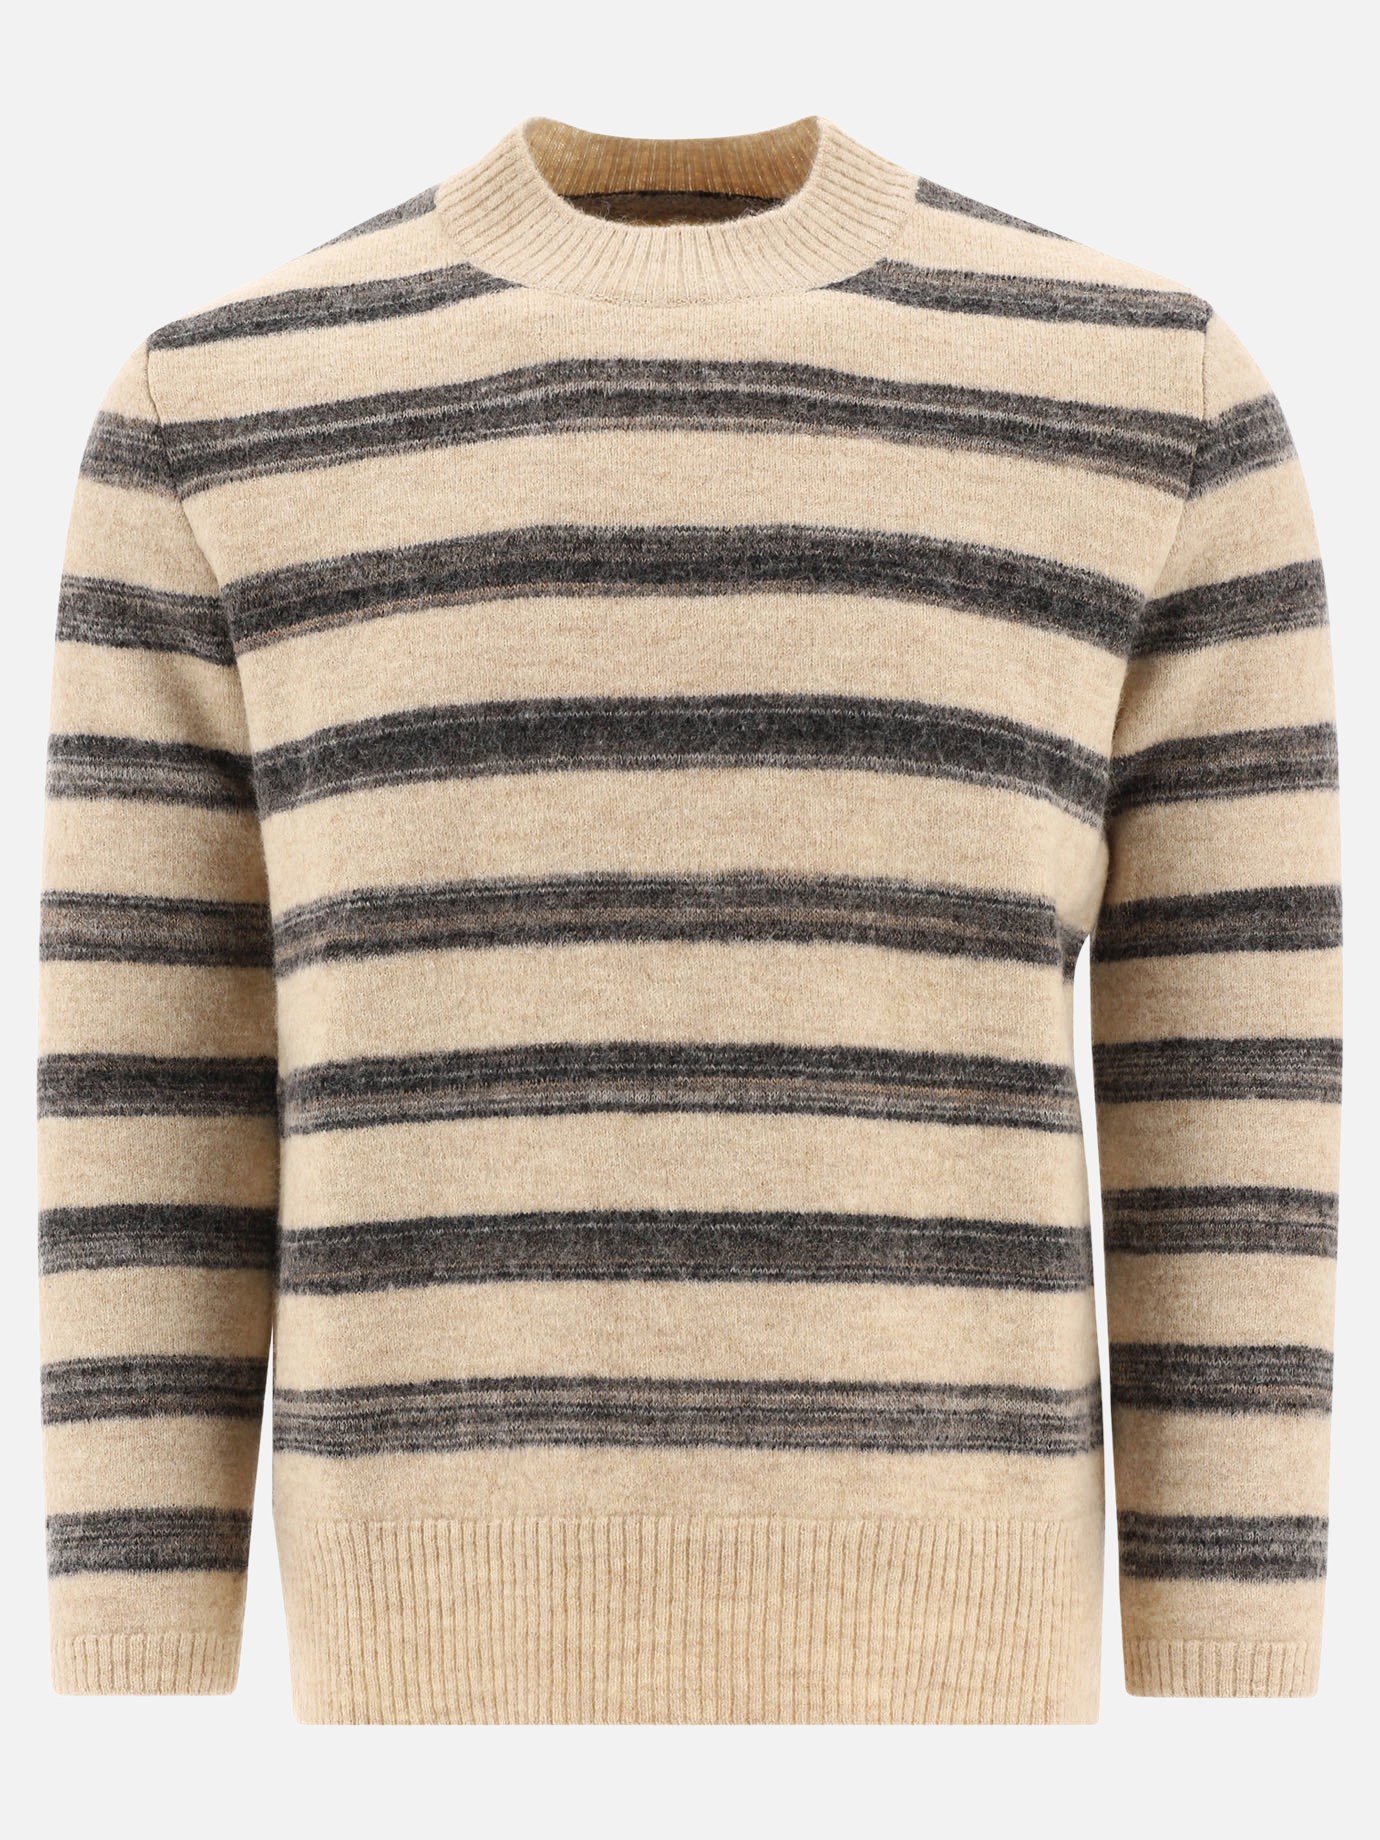  Four Stitches  striped sweaterby Maison Margiela - 3